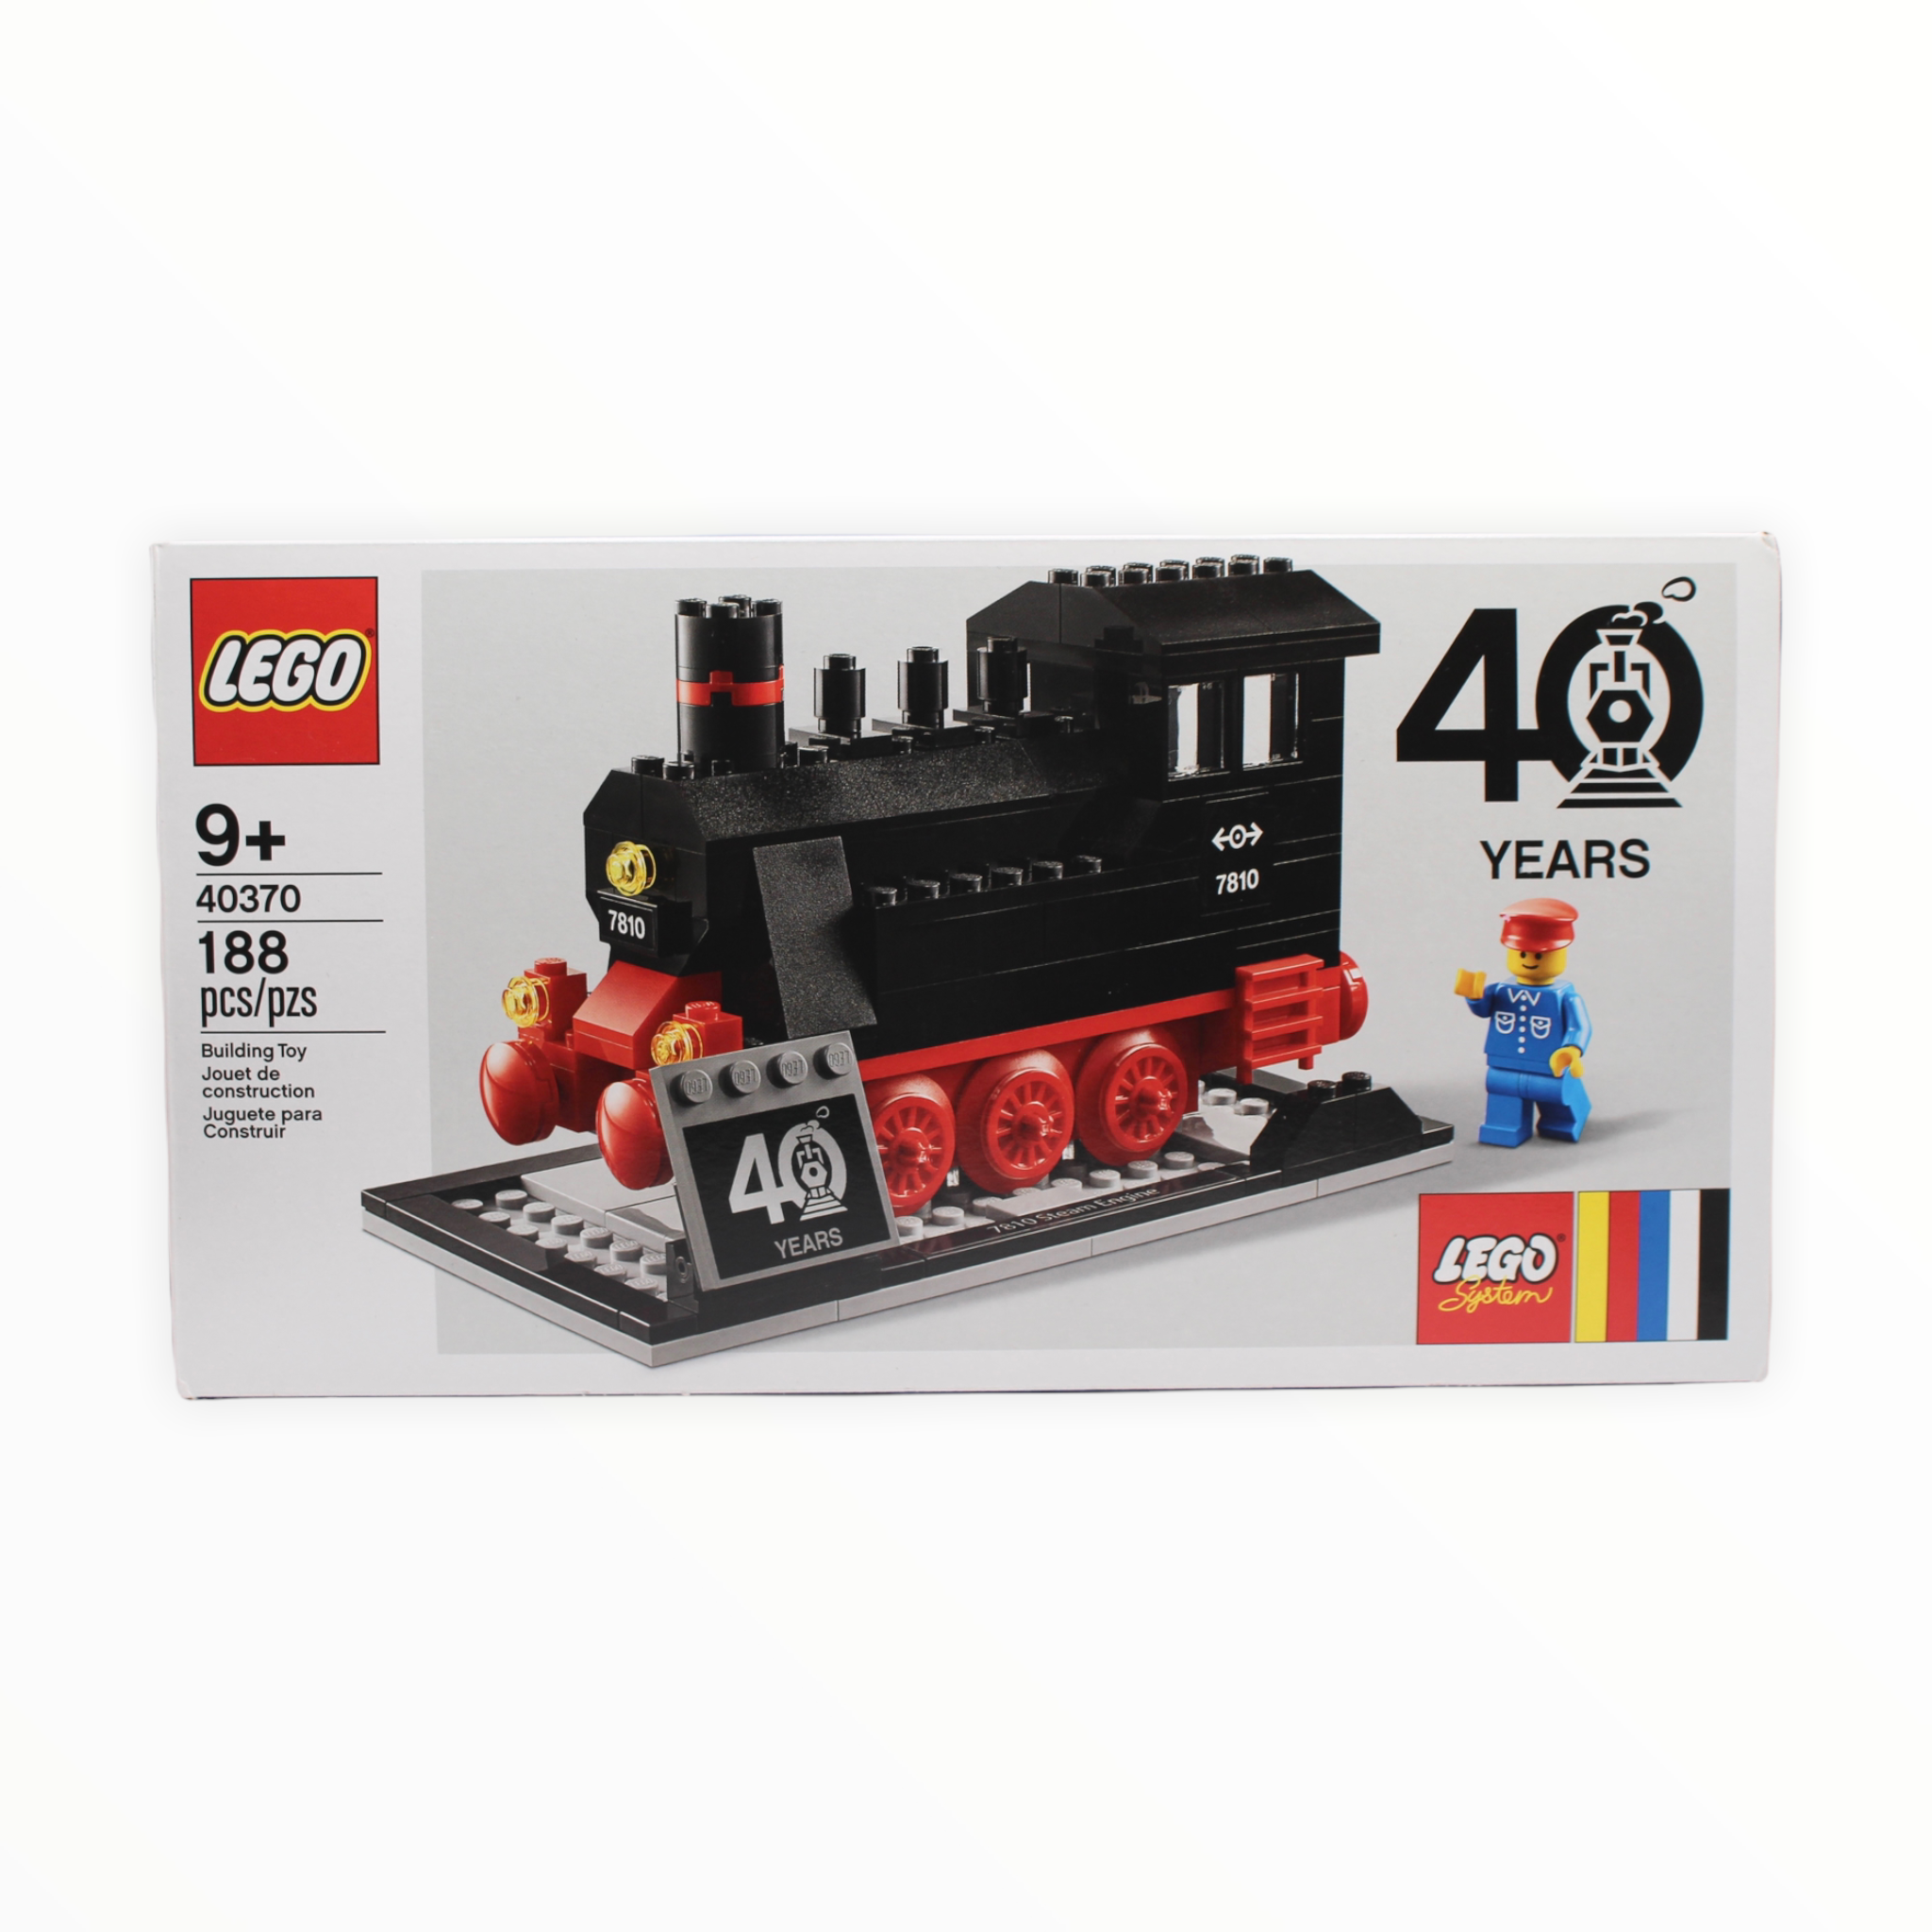 Retired Set 40370 LEGO Trains 40th Anniversary Set